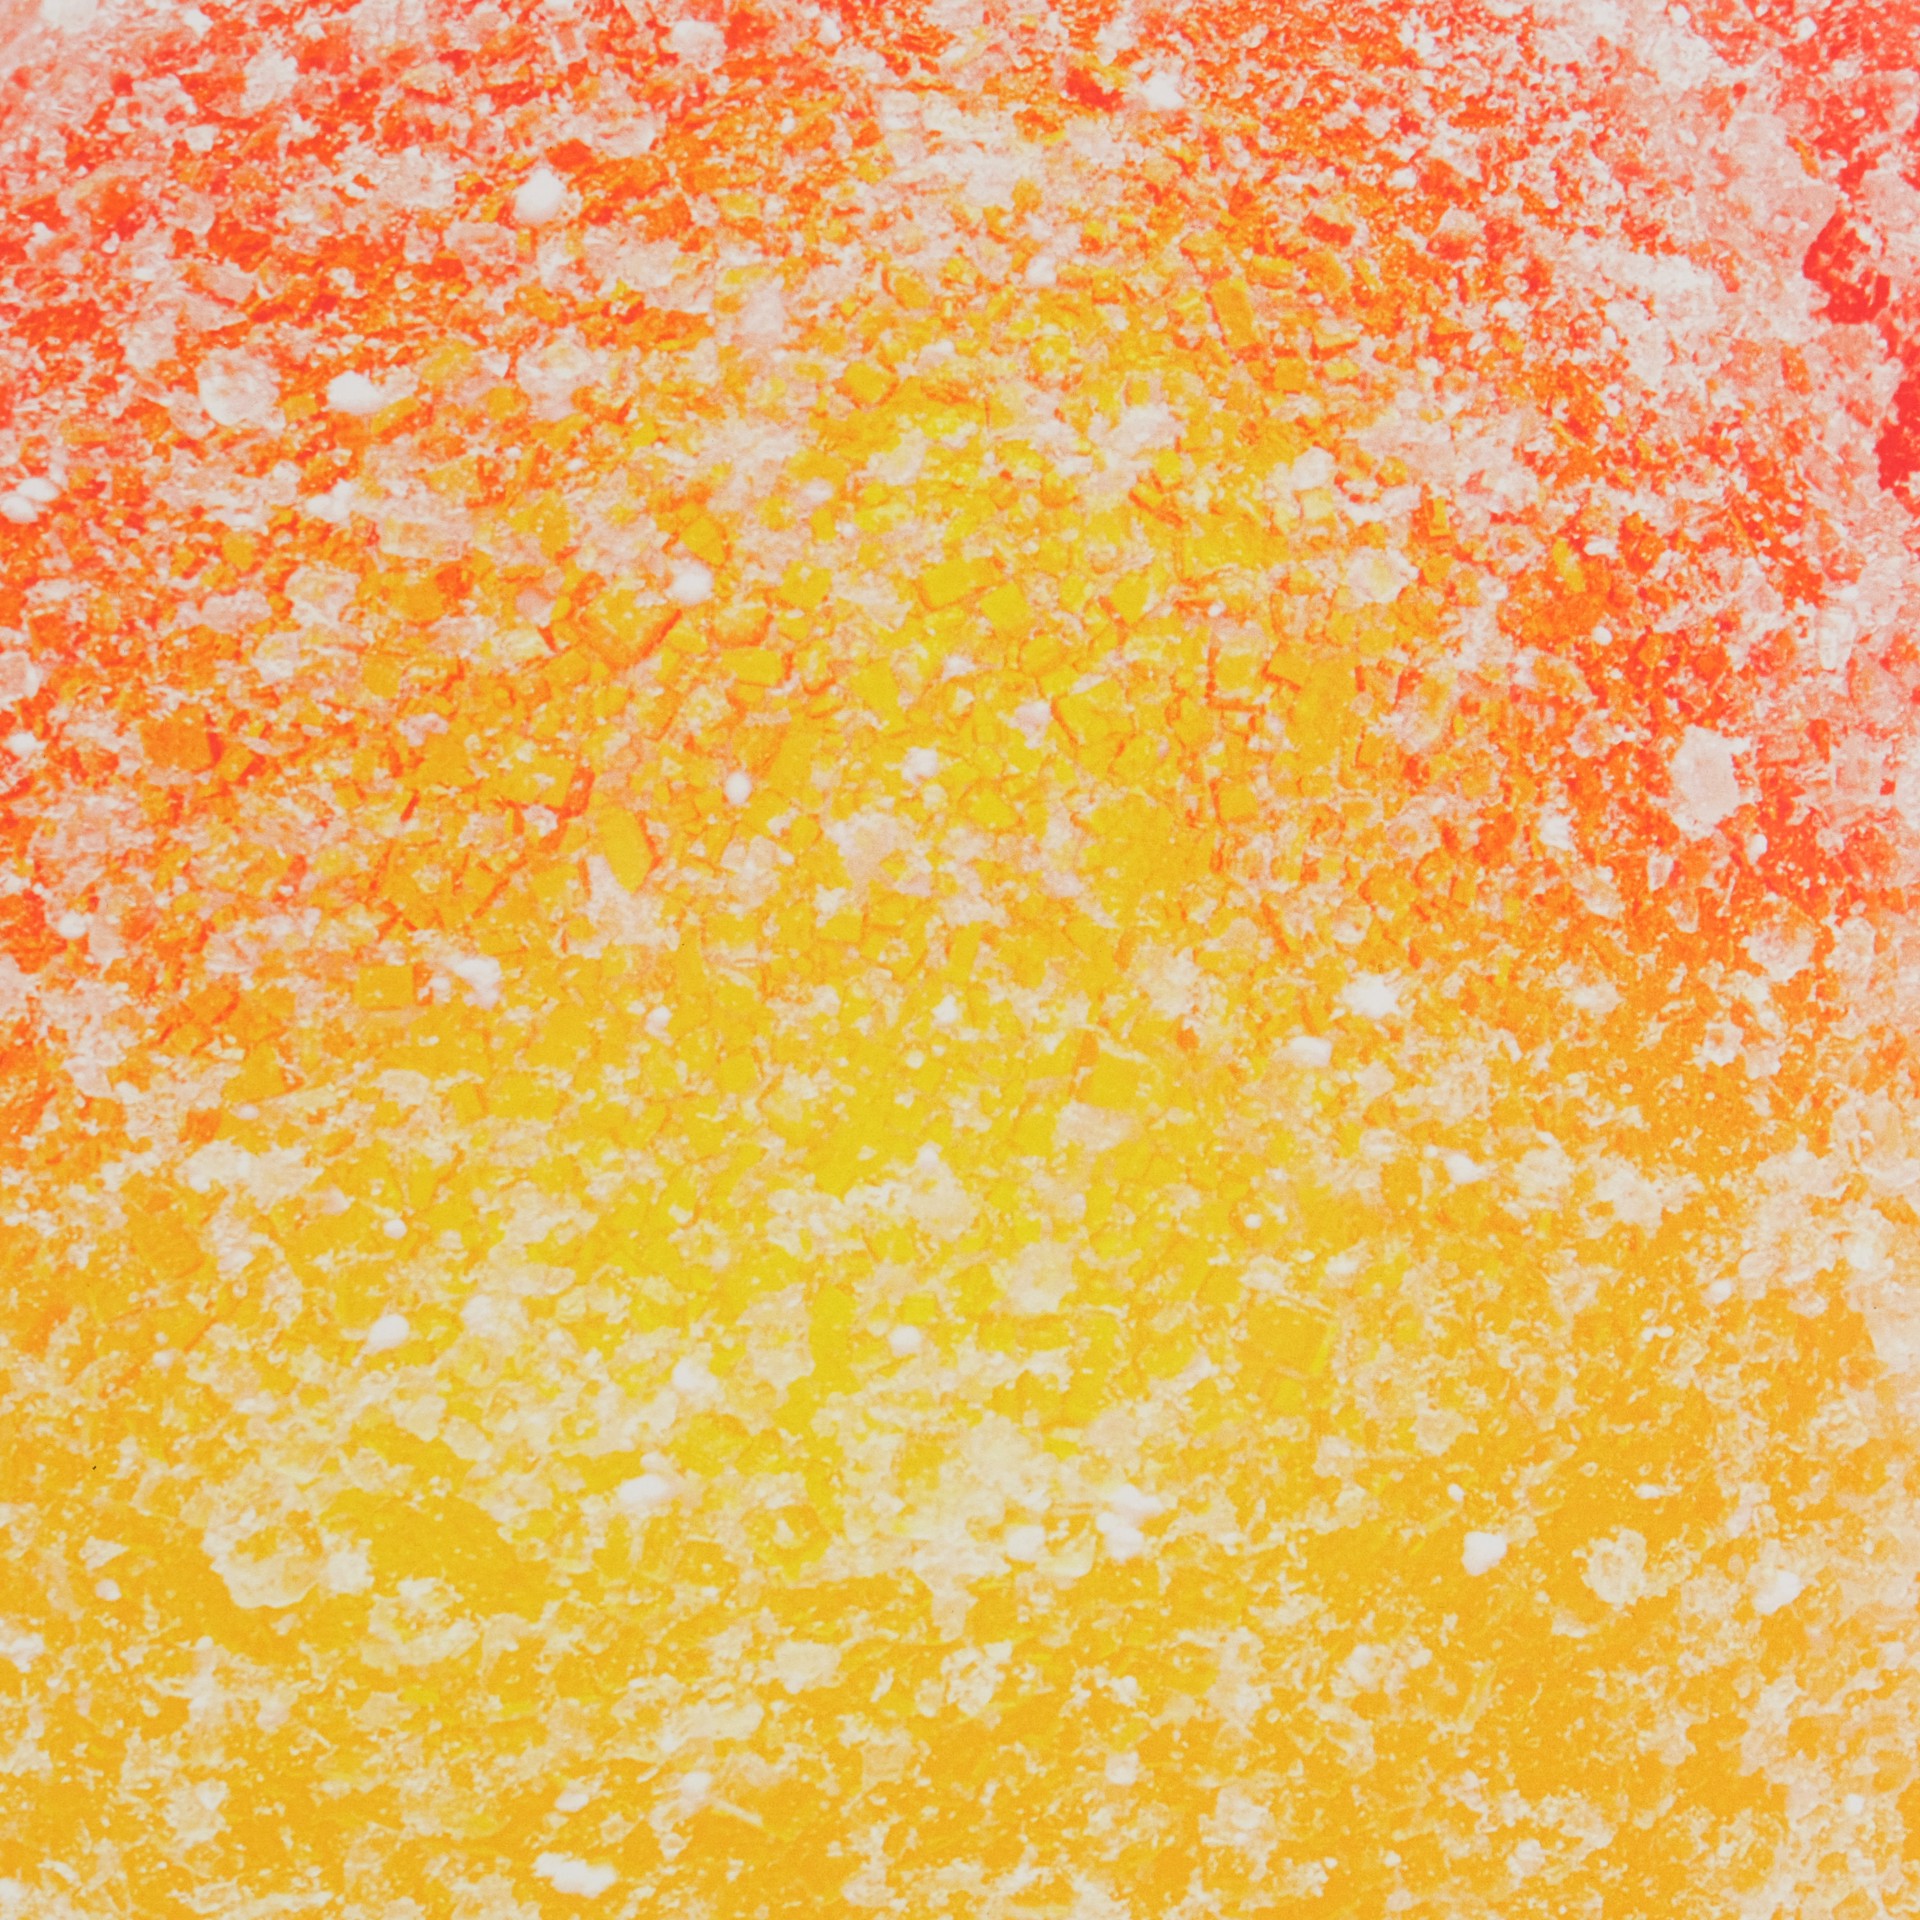 Fuzzy Peach by Peter Andrew Lusztyk / Refined Sugar